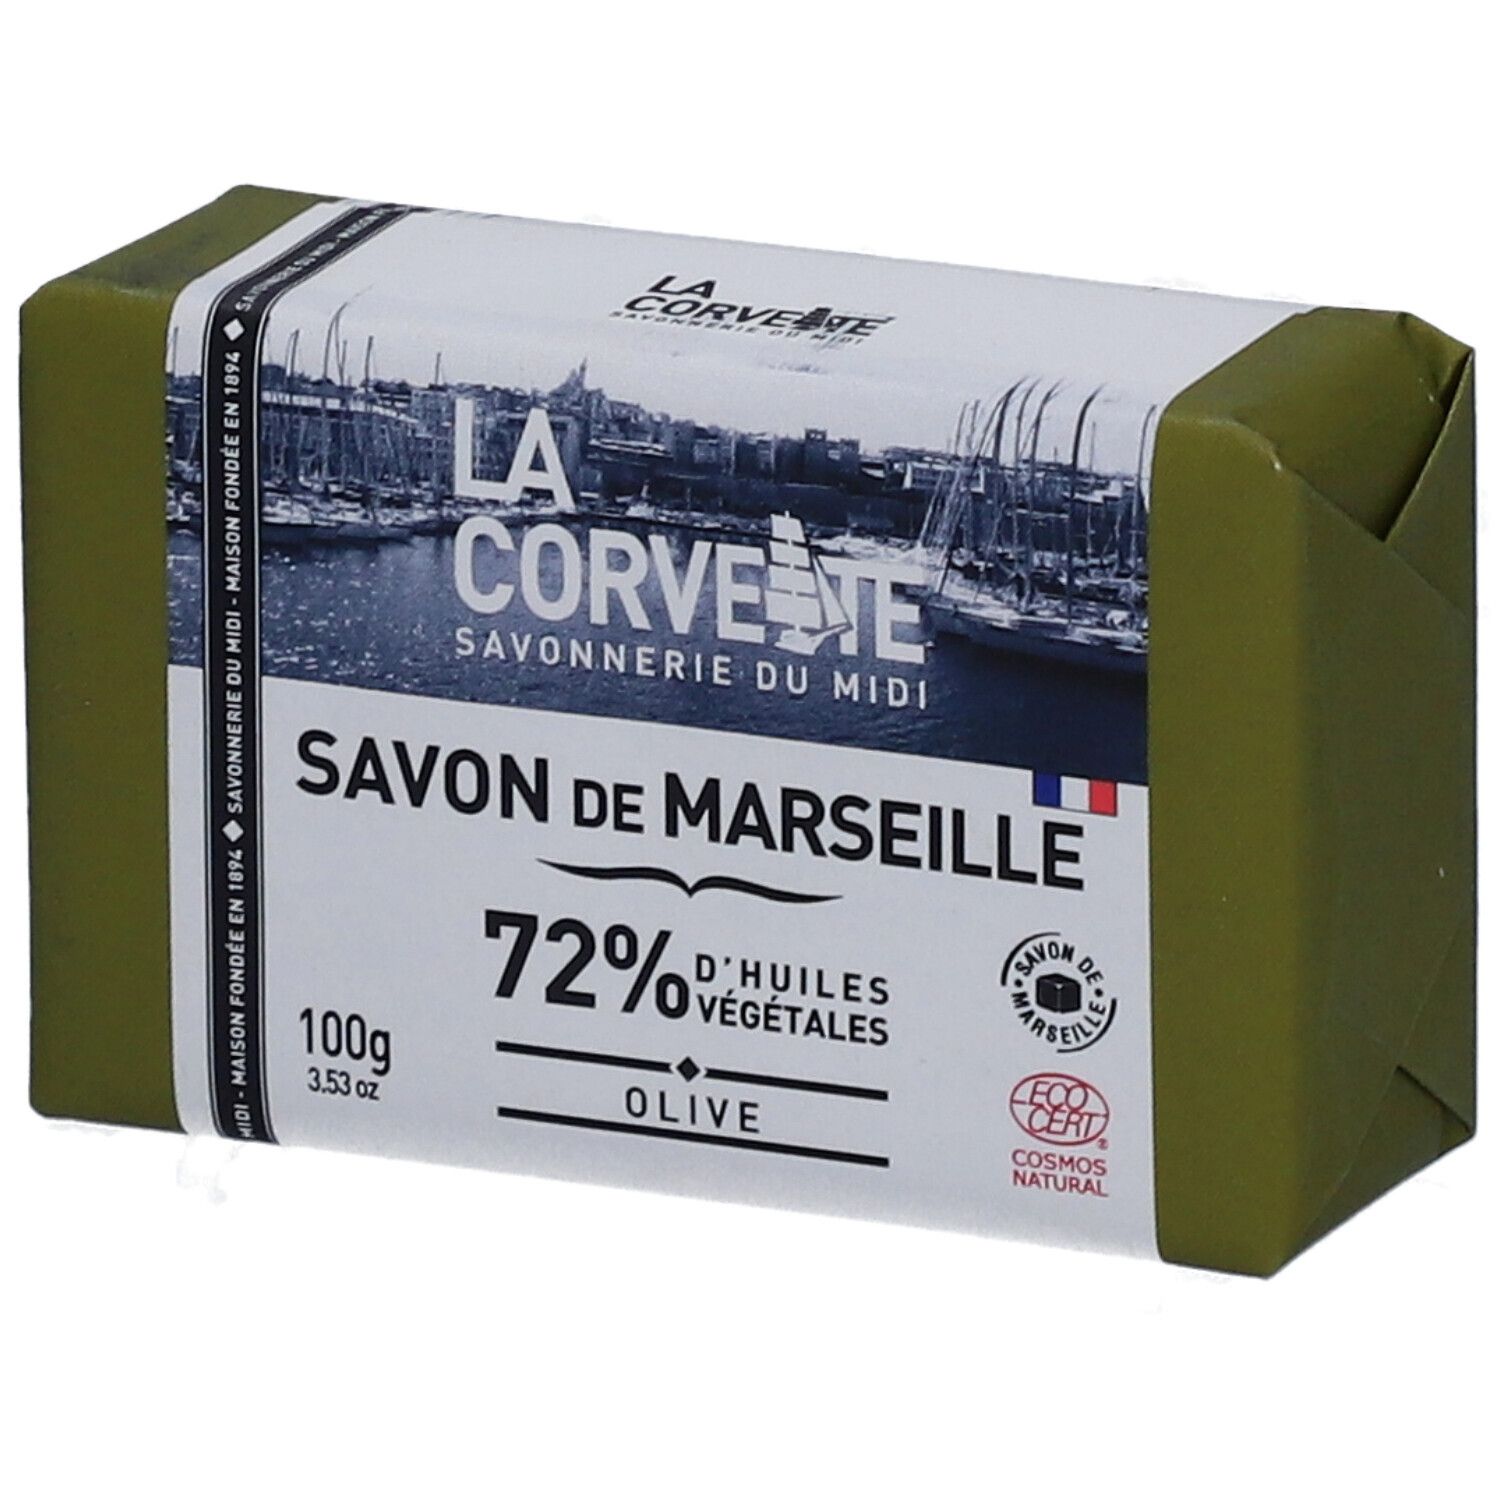 LA Corvette Savon de Marseille Olive